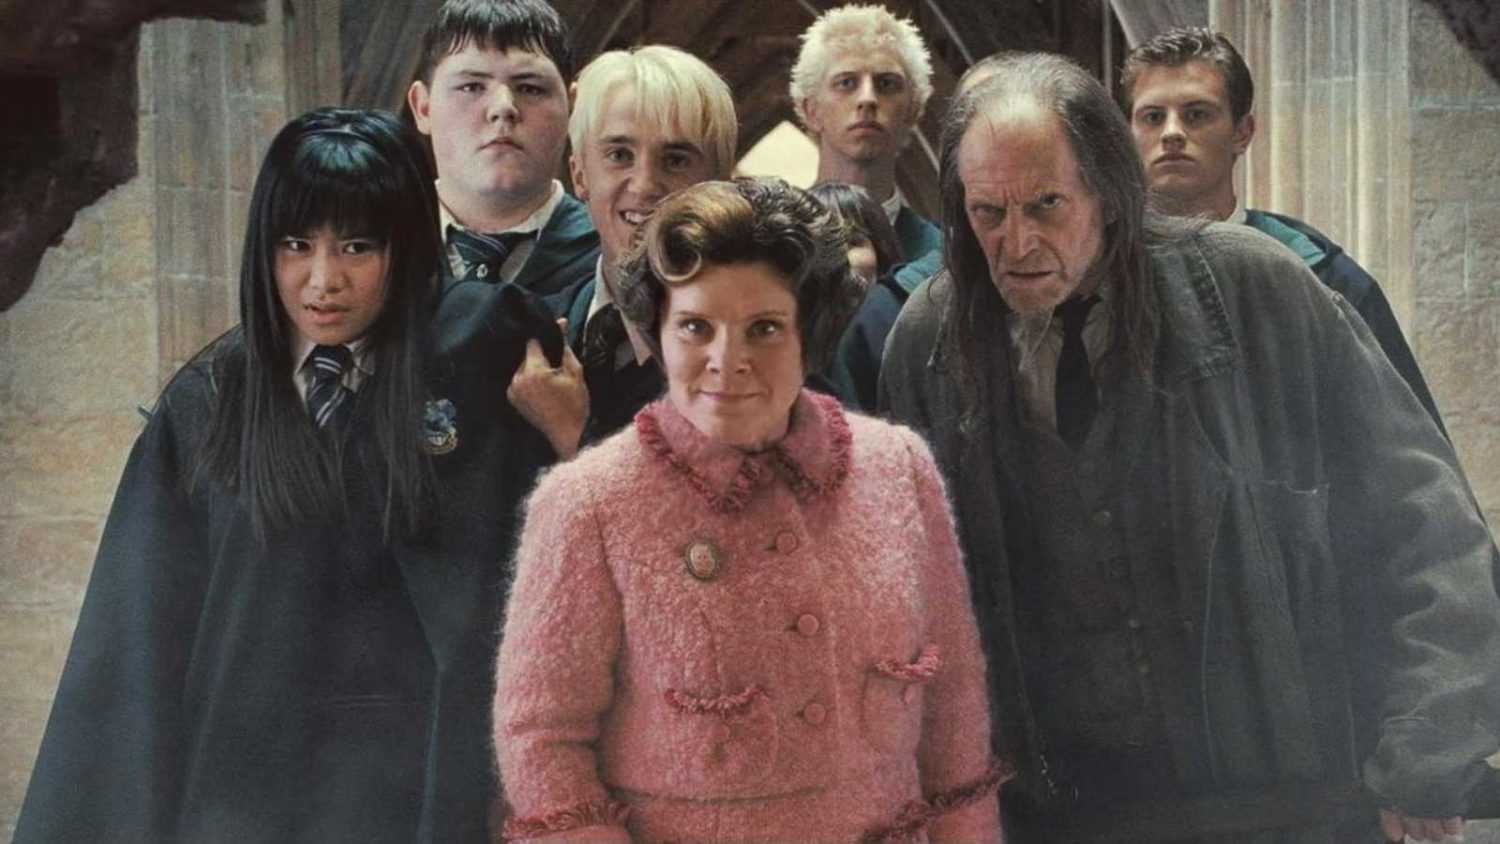 Imelda Staunton, David Bradley, Tom Felton, Jamie Waylett, Katie Leung, and Ashley Hull in Harry Potter and the Order of the Phoenix (2007)